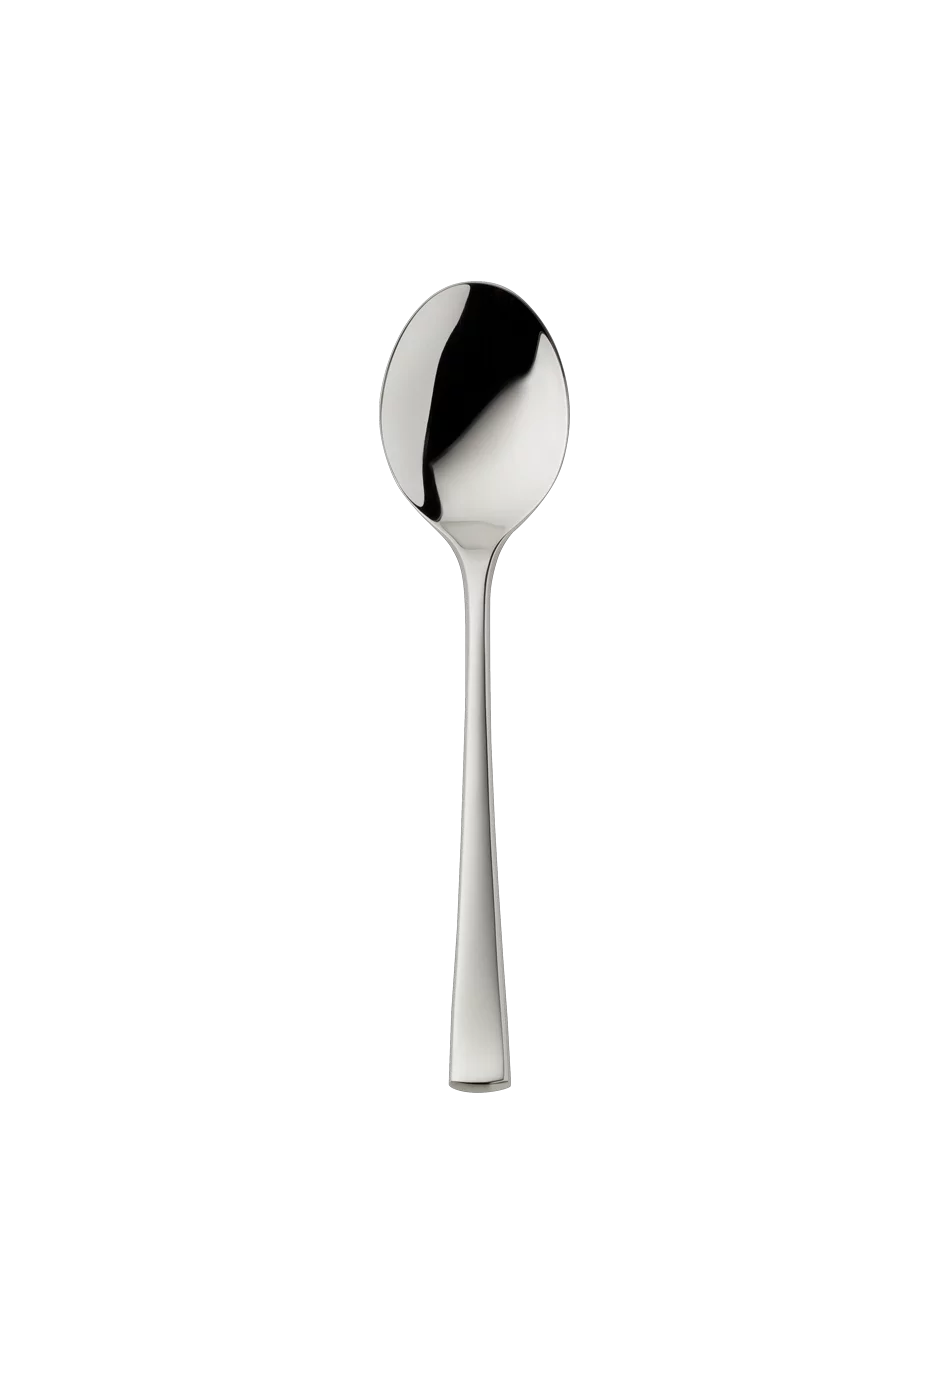 York Children's Spoon (18/8 stainless steel)